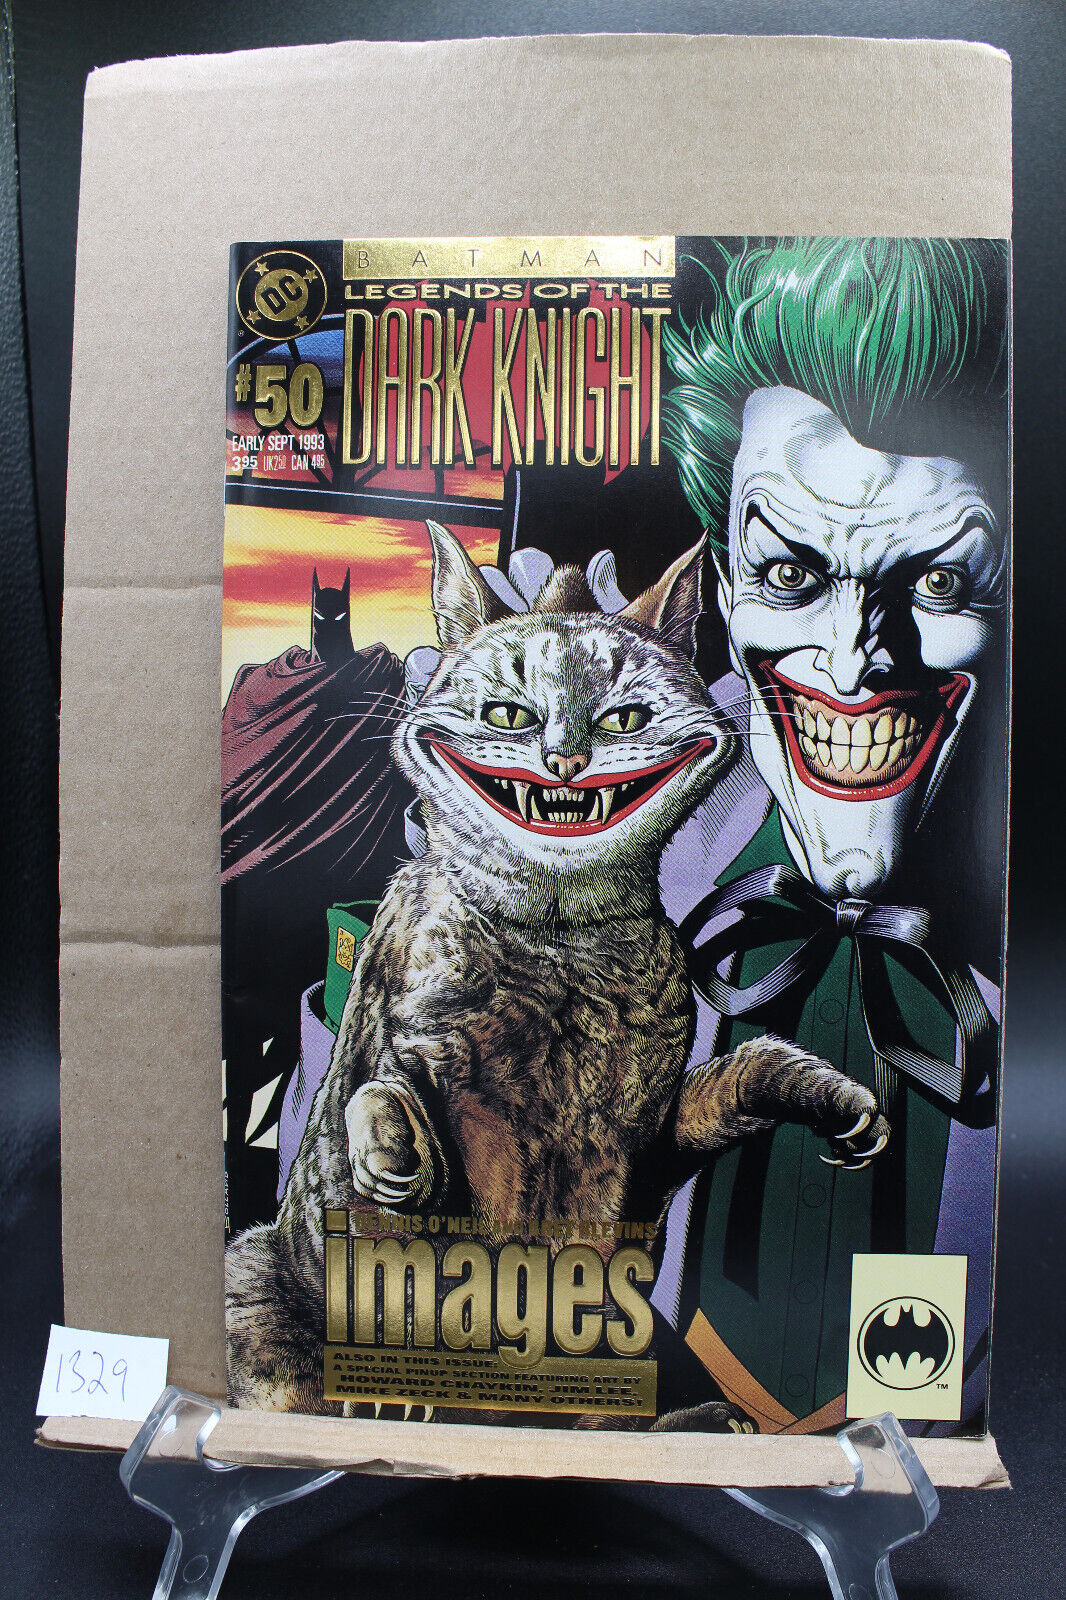 BATMAN: LEGENDS OF THE DARK KNIGHT #50 (-9.4) FOIL JOKER COVER/IMAGES/DC COMICS